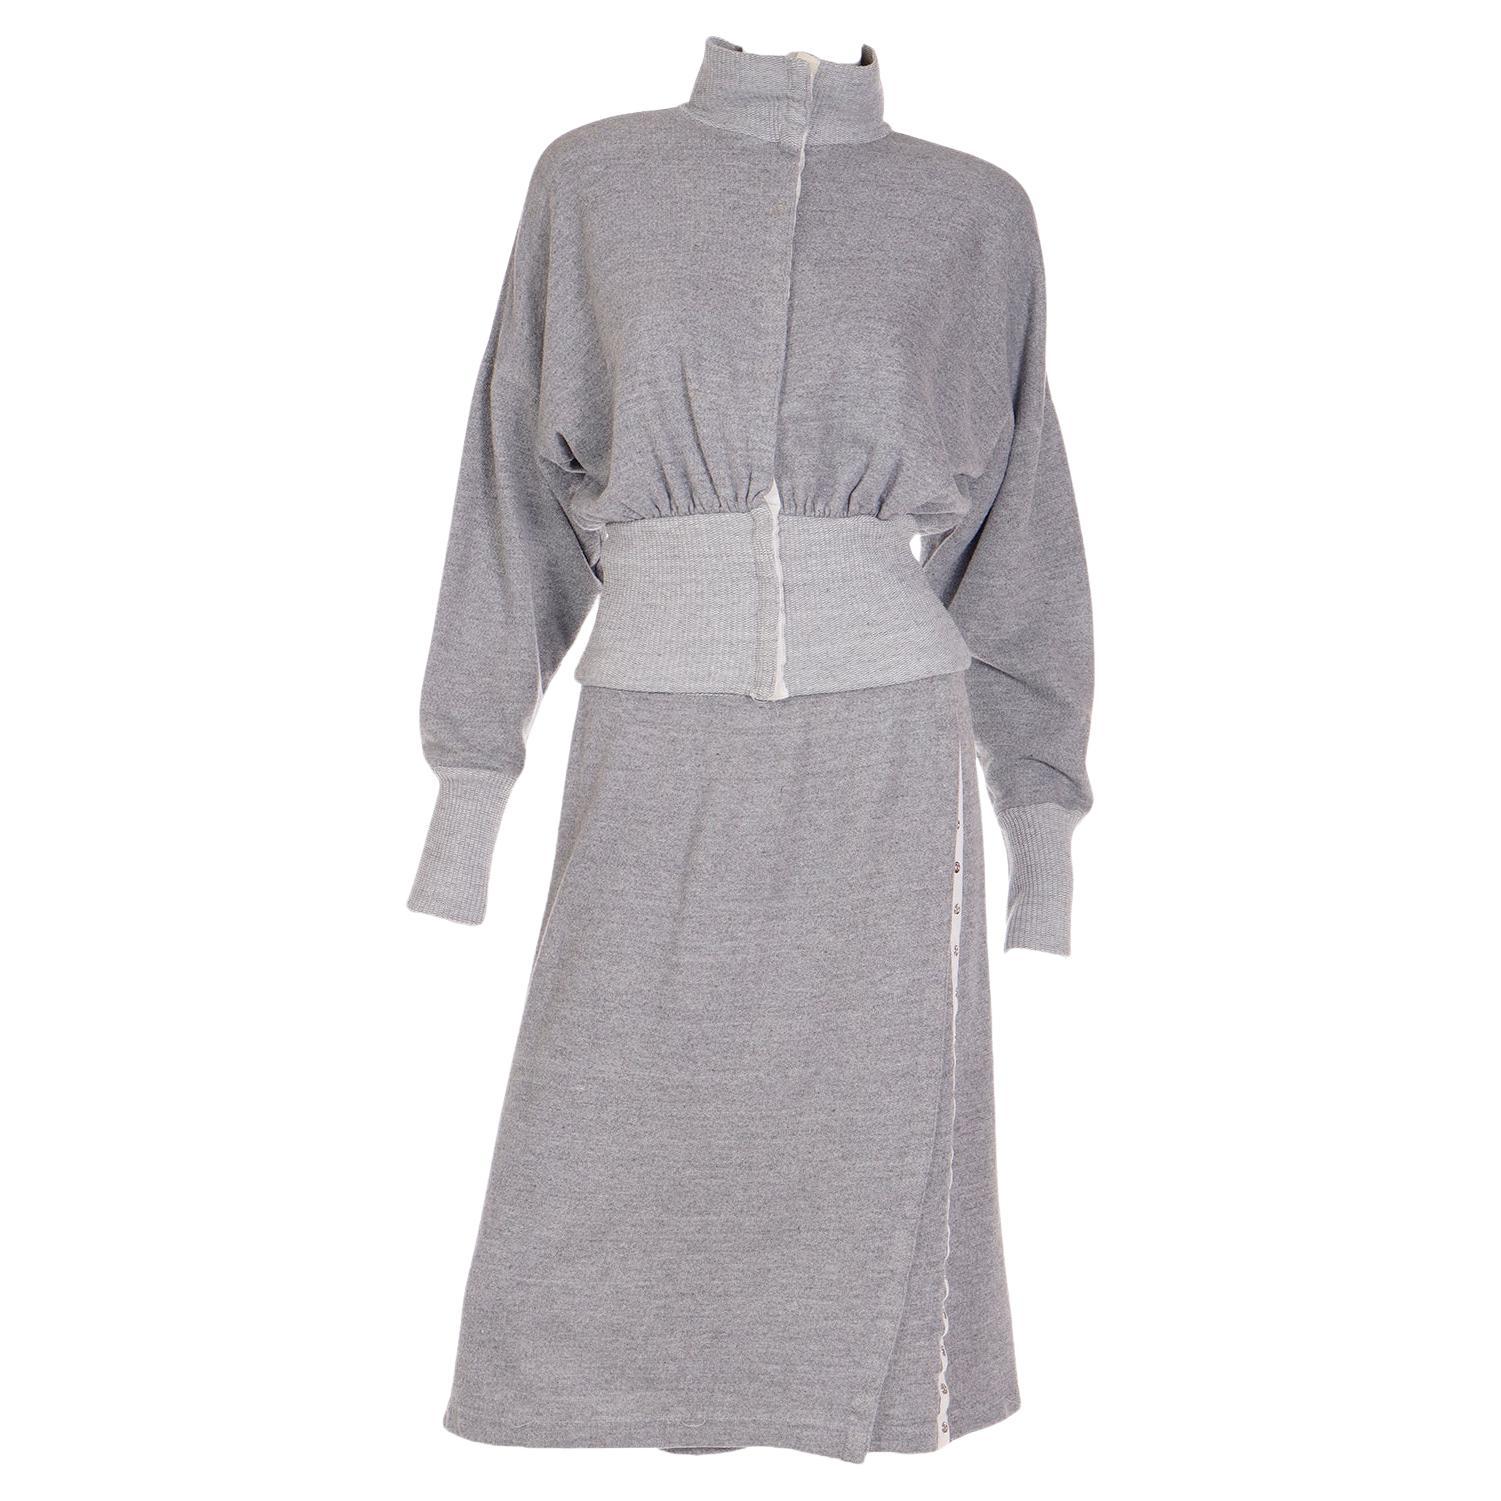 Norma Kamali 1980 Sweats Grey Sweatshirt 2 pc Dress w Snap Front Top & Skirt For Sale